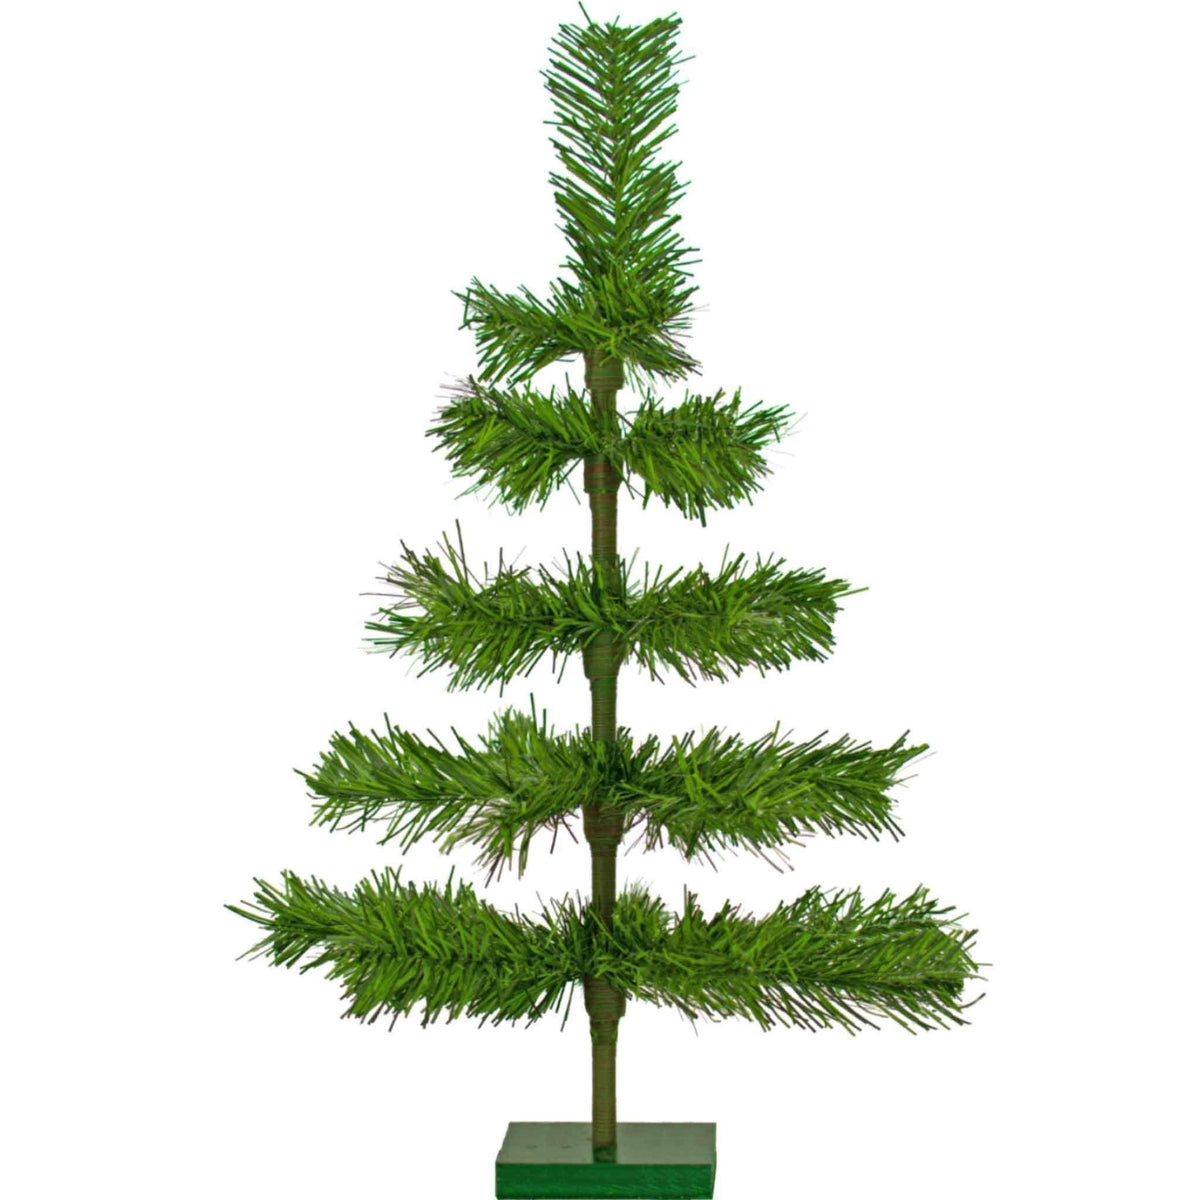 18in Alpine Green Tinsel Christmas Tree sold at leedisplay.com